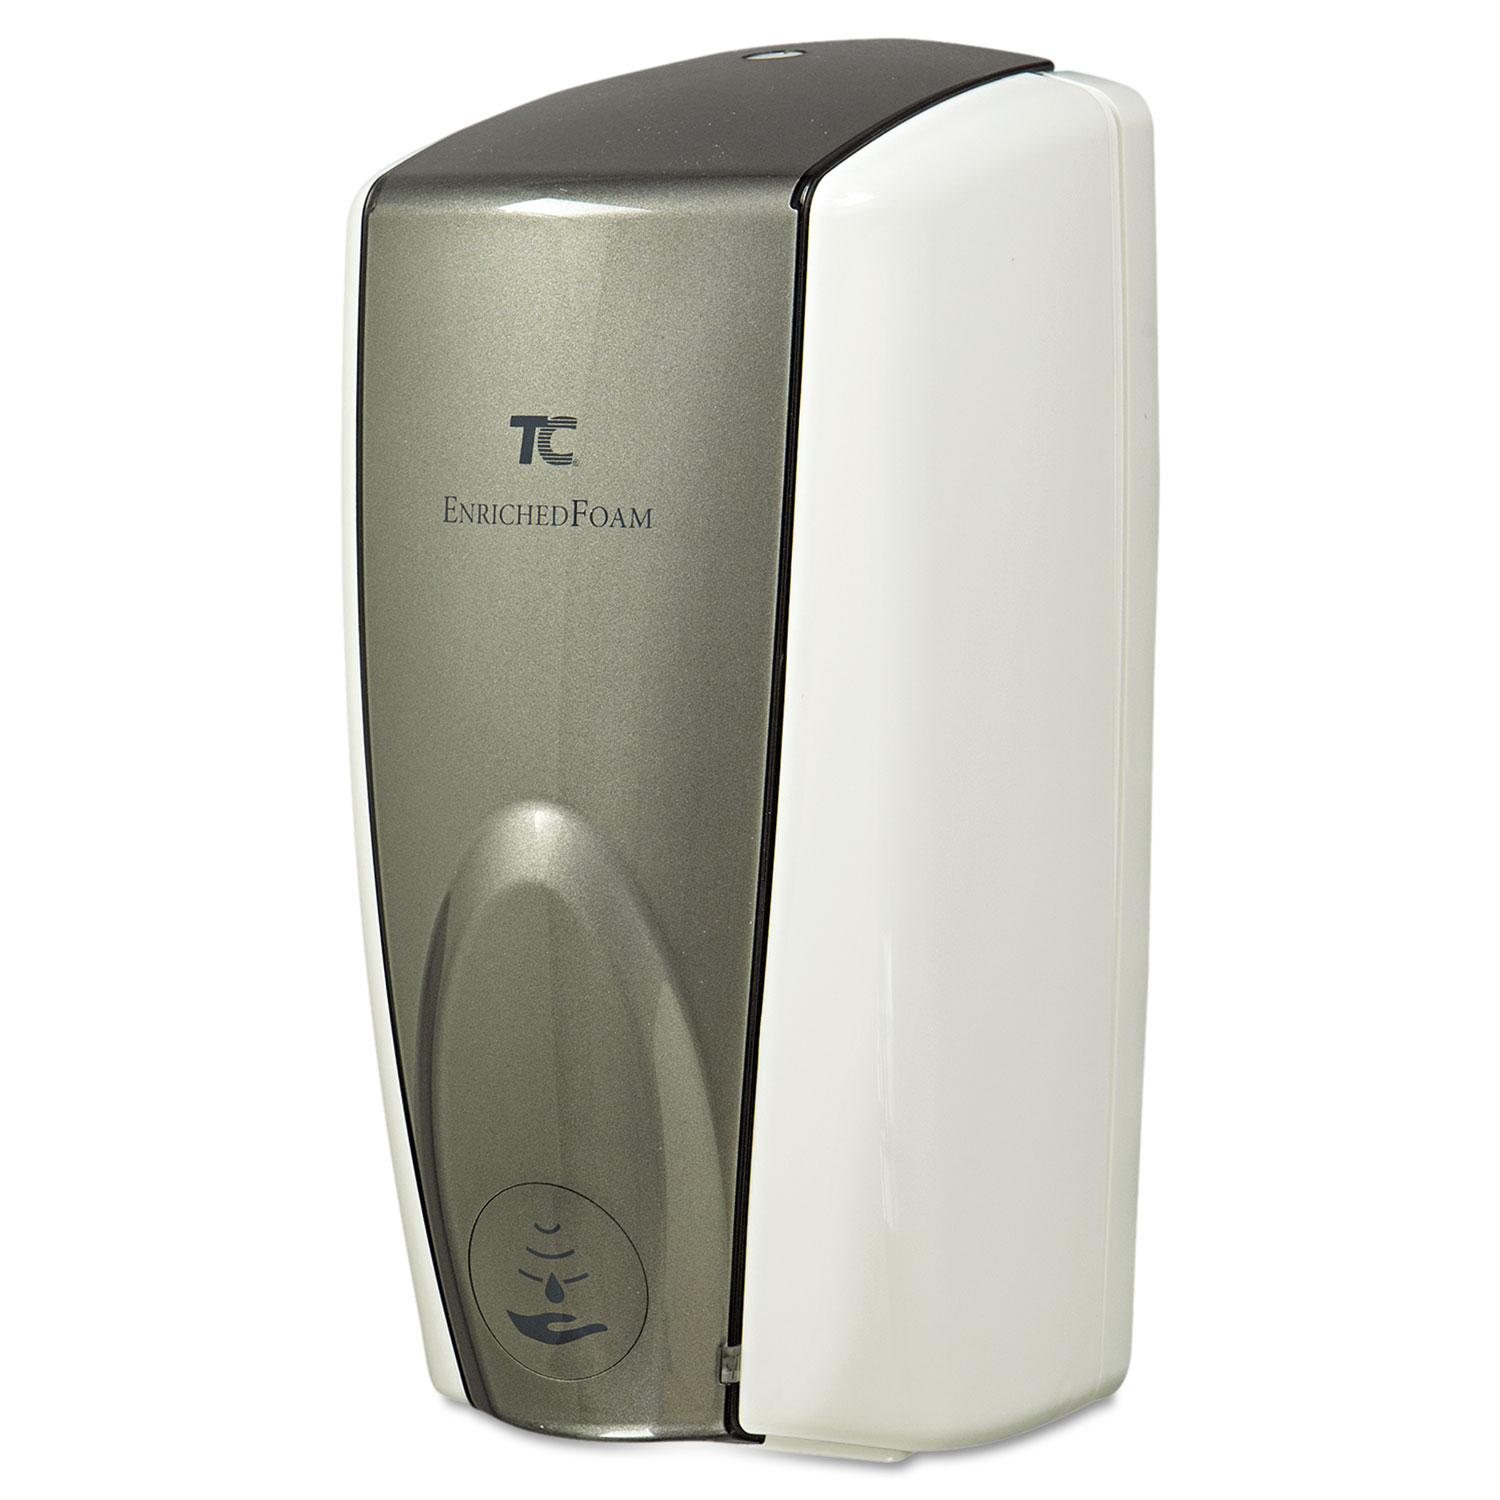  Rubbermaid Commercial FG750140 AutoFoam Touch-Free Dispenser, 1100 mL, 5.2 x 5.25 x 10.9, White/Gray Pearl (RCP750140) 